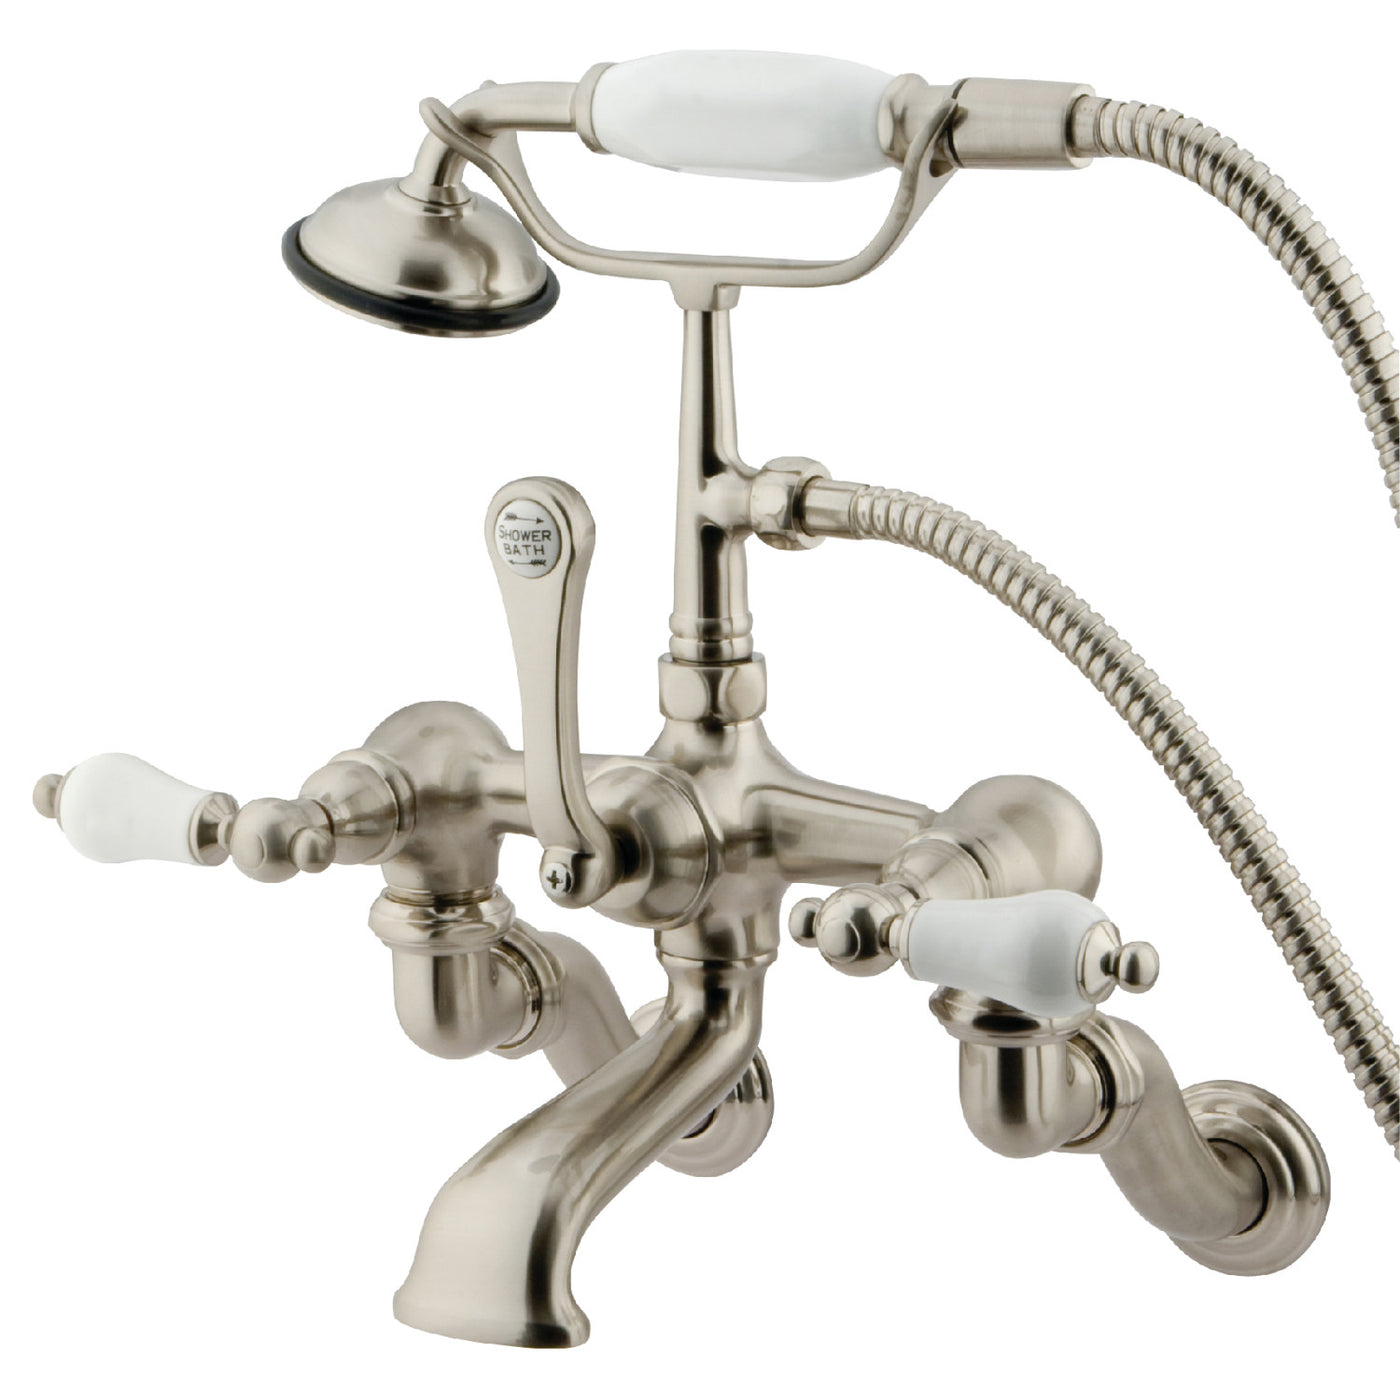 Elements of Design DT4578PL Adjustable Center Wall Mount Tub Faucet with Hand Shower, Brushed Nickel